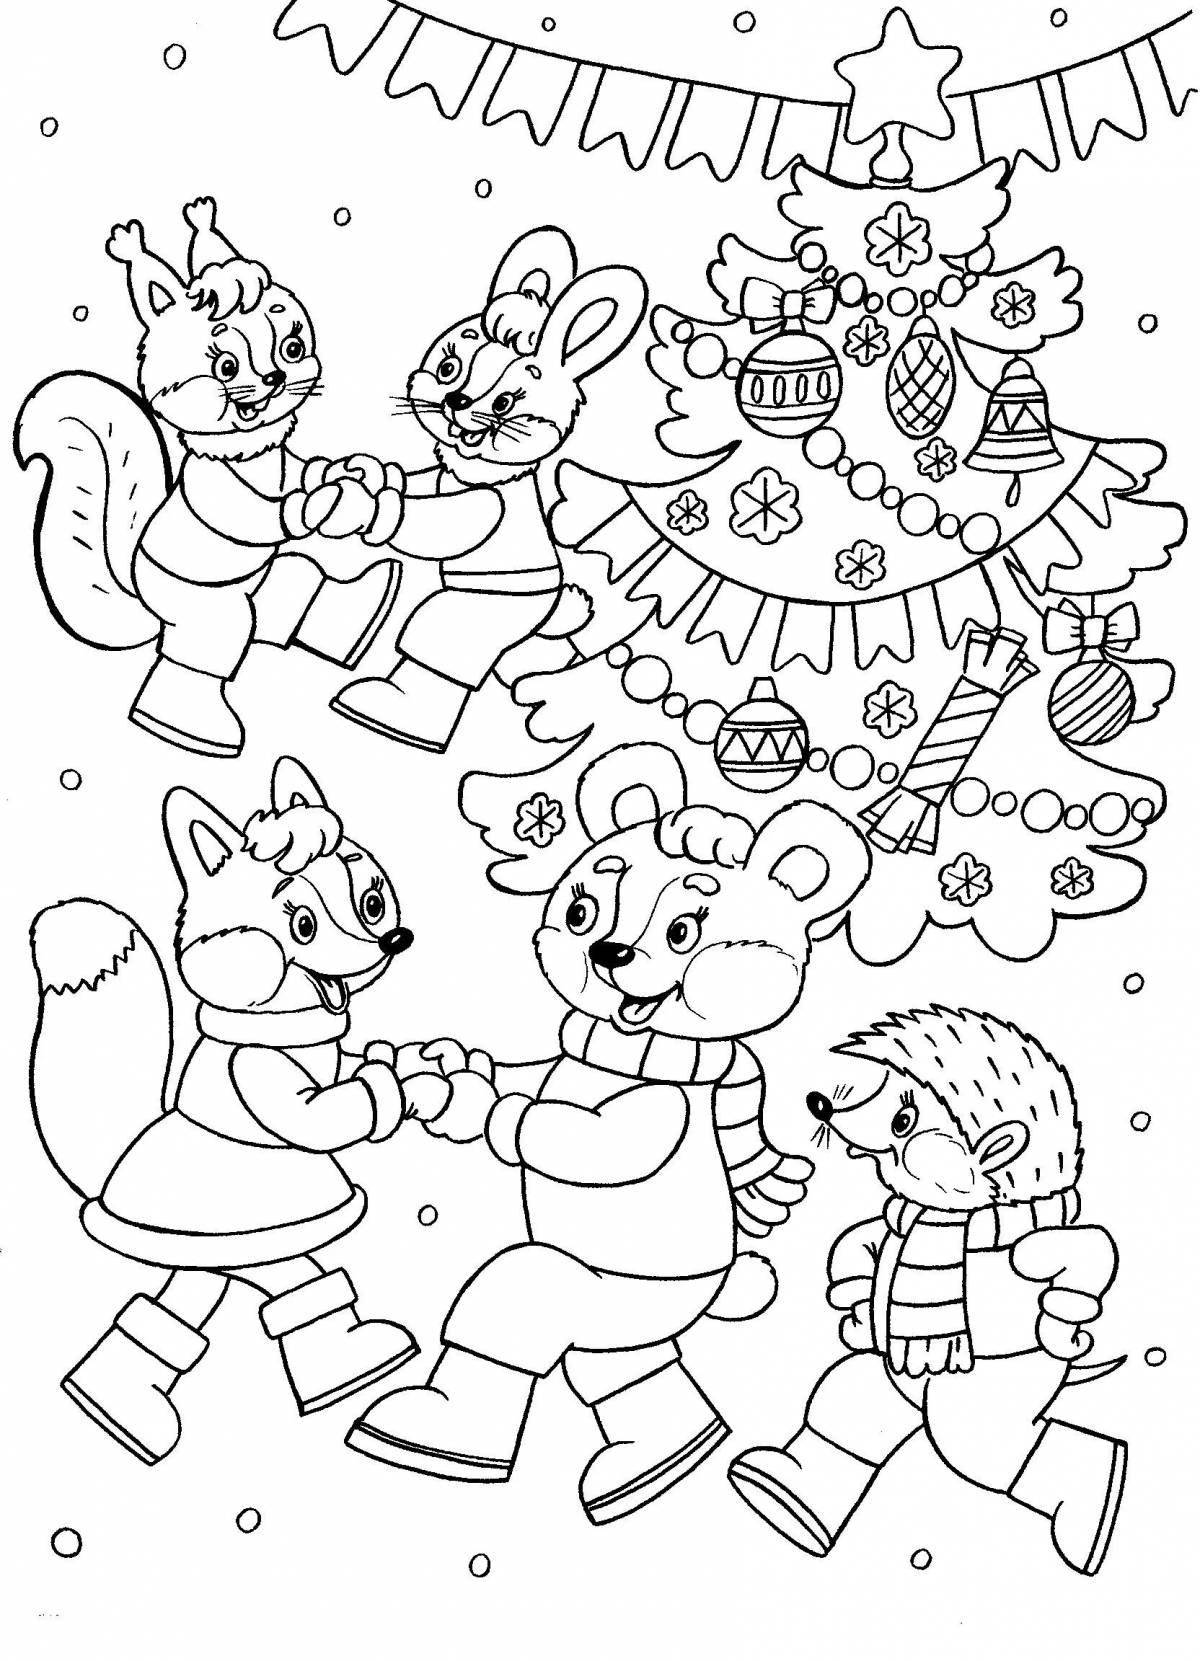 Festive Christmas coloring book